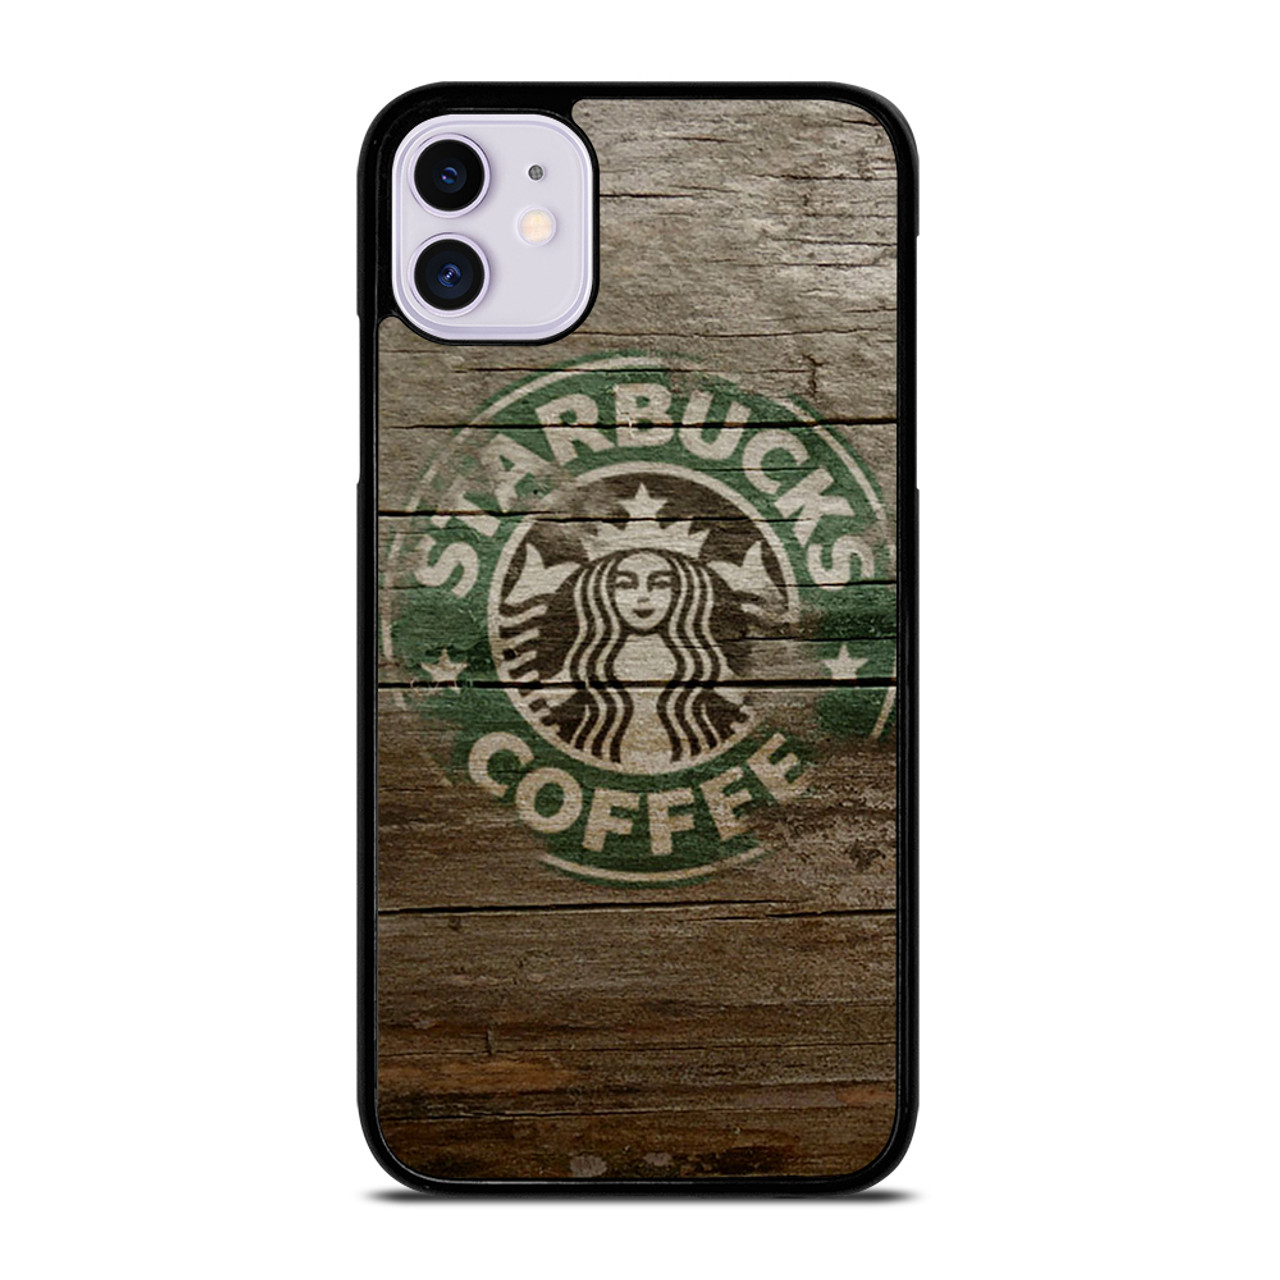 IPhone 11 Case Starbuck Print Design ||Mobile Phone Case for IPhone||  Latest IPhone Covers || IPhone Covers LV